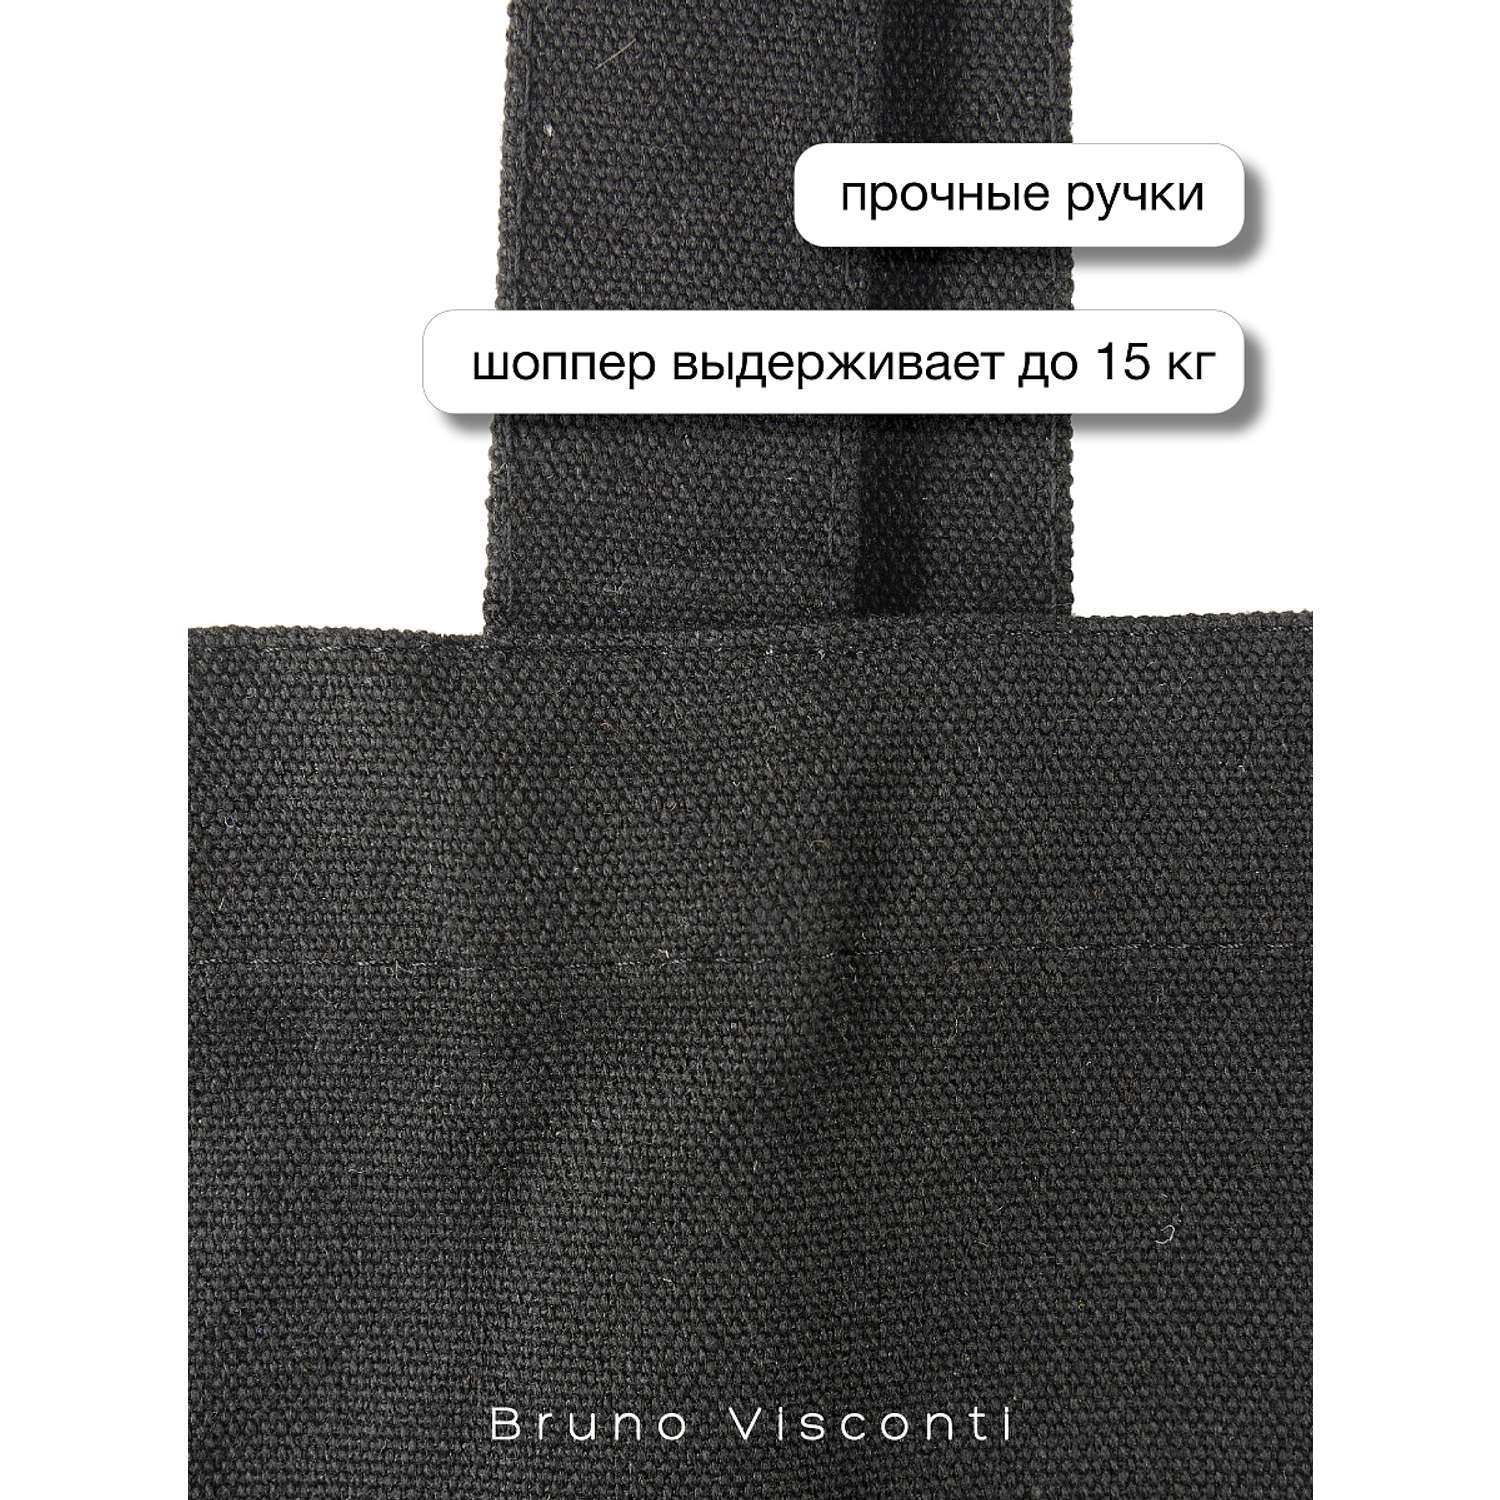 Сумка-шоппер Bruno Visconti Забавный Корги черная 34х36 см - фото 8